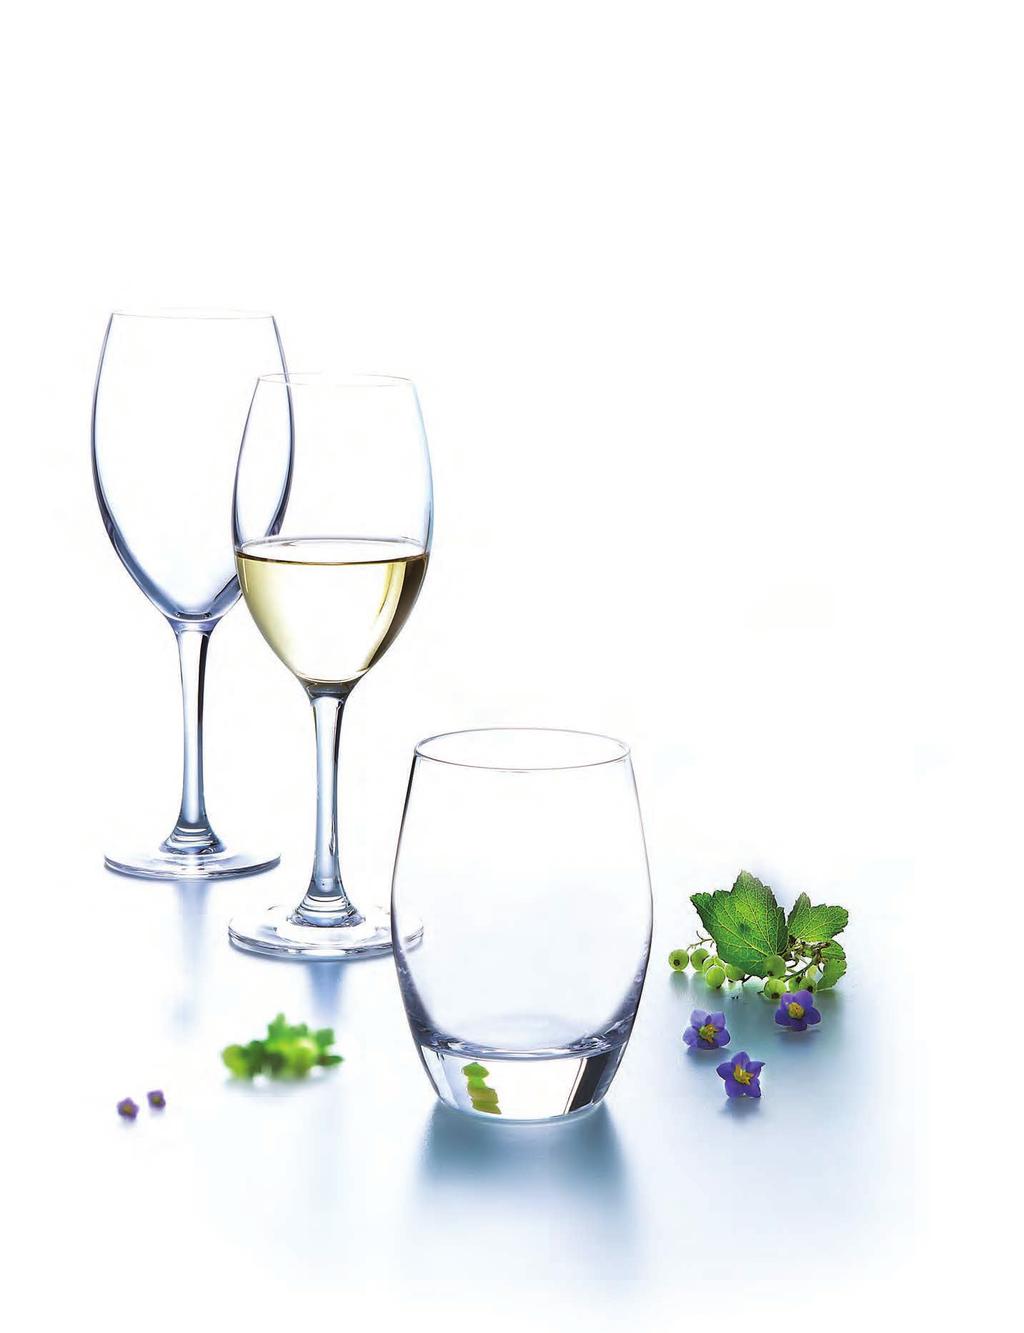 vin blanc ΓΥΑΛΙ - GLASS cabernet 1215388 Οίνου 46888 Wine 58cl 23 x 9,5cm 1215361 46961 47cl Νερού Water 22 x 9cm 1215373 Οίνου 46973 Wine 35cl 20,2 x 8,1cm 1215378